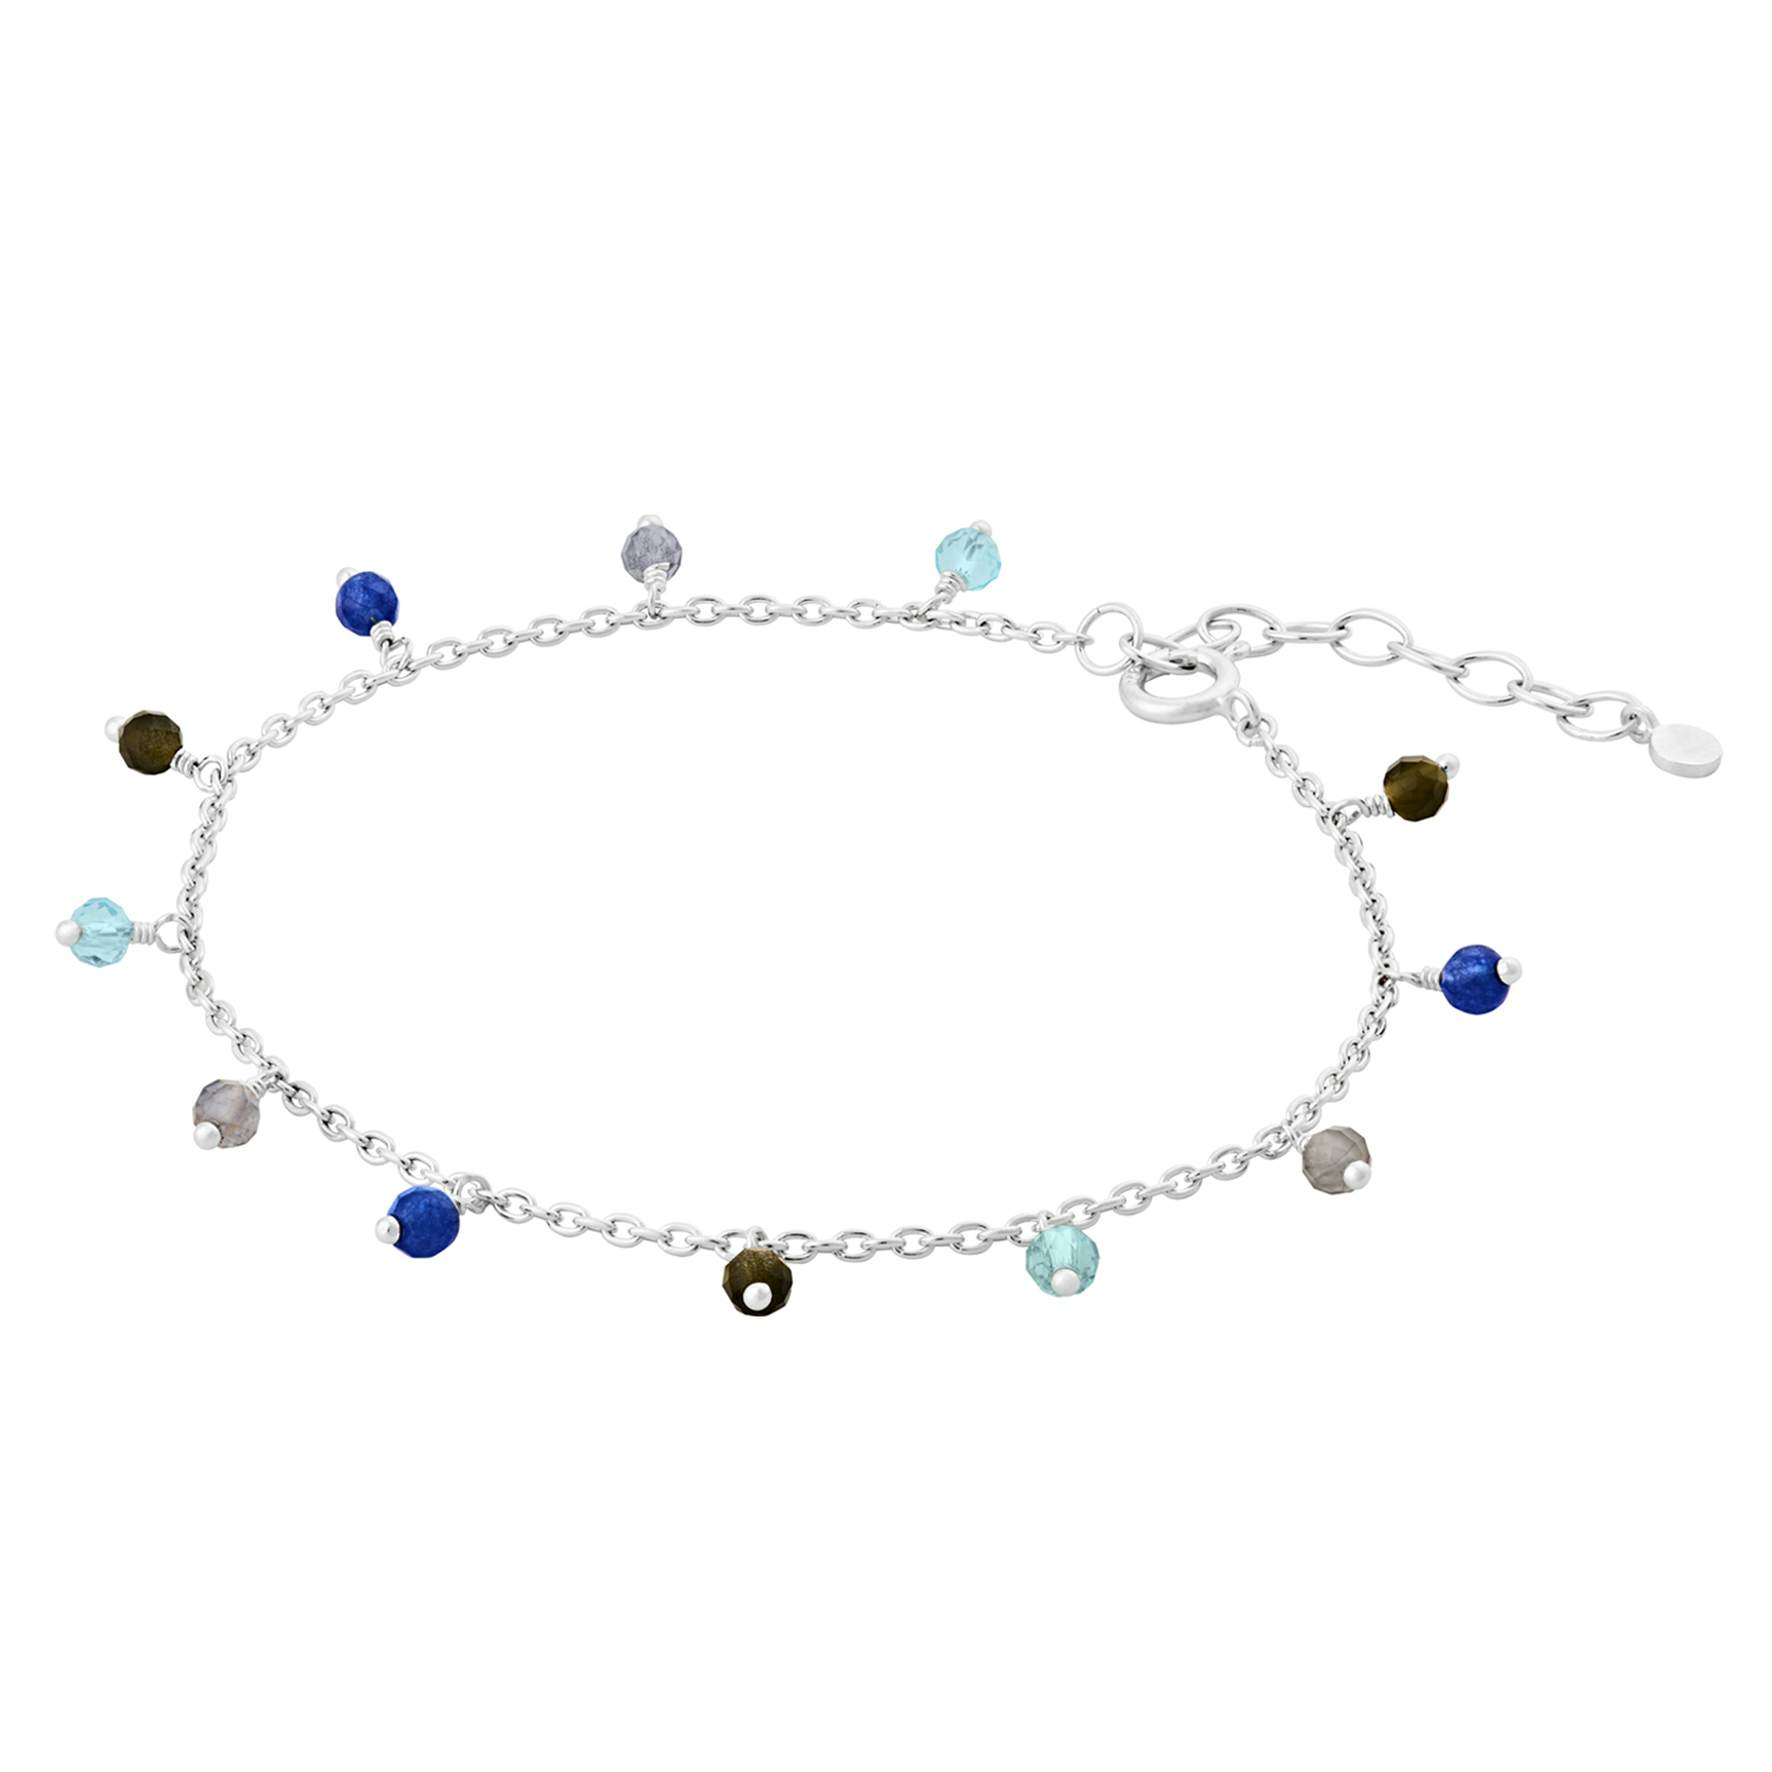 Blue Hour Bracelet from Pernille Corydon in Silver Sterling 925